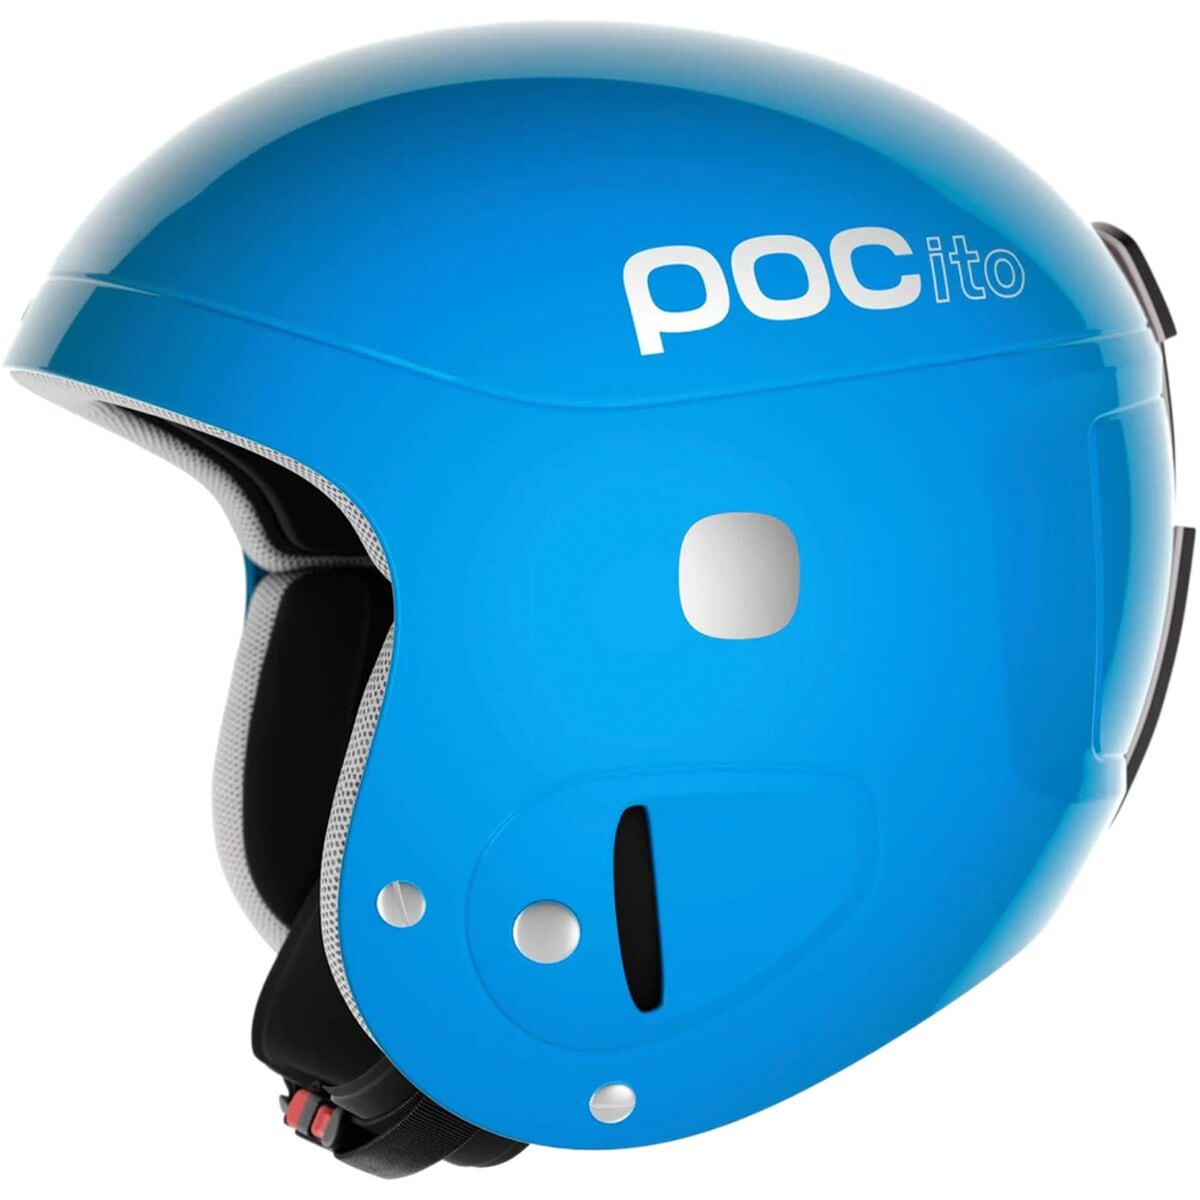 POC POCito Skull Helmet - Kids' Fluorescent Blue